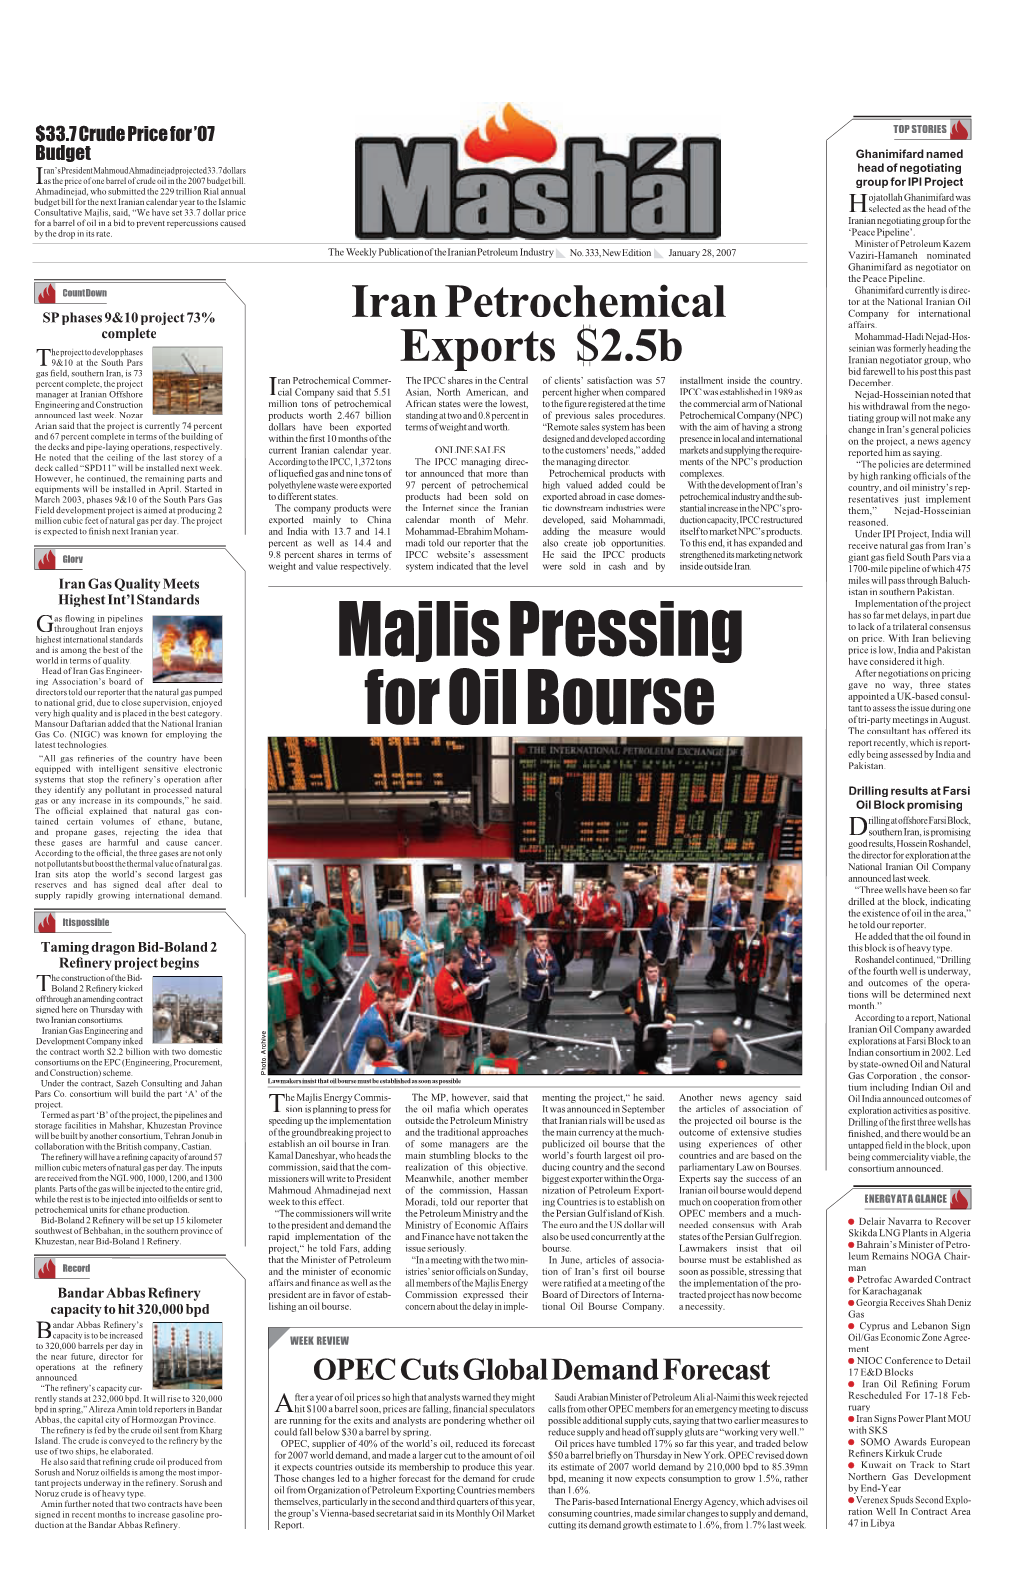 Majlis Pressing for Oil Bourse